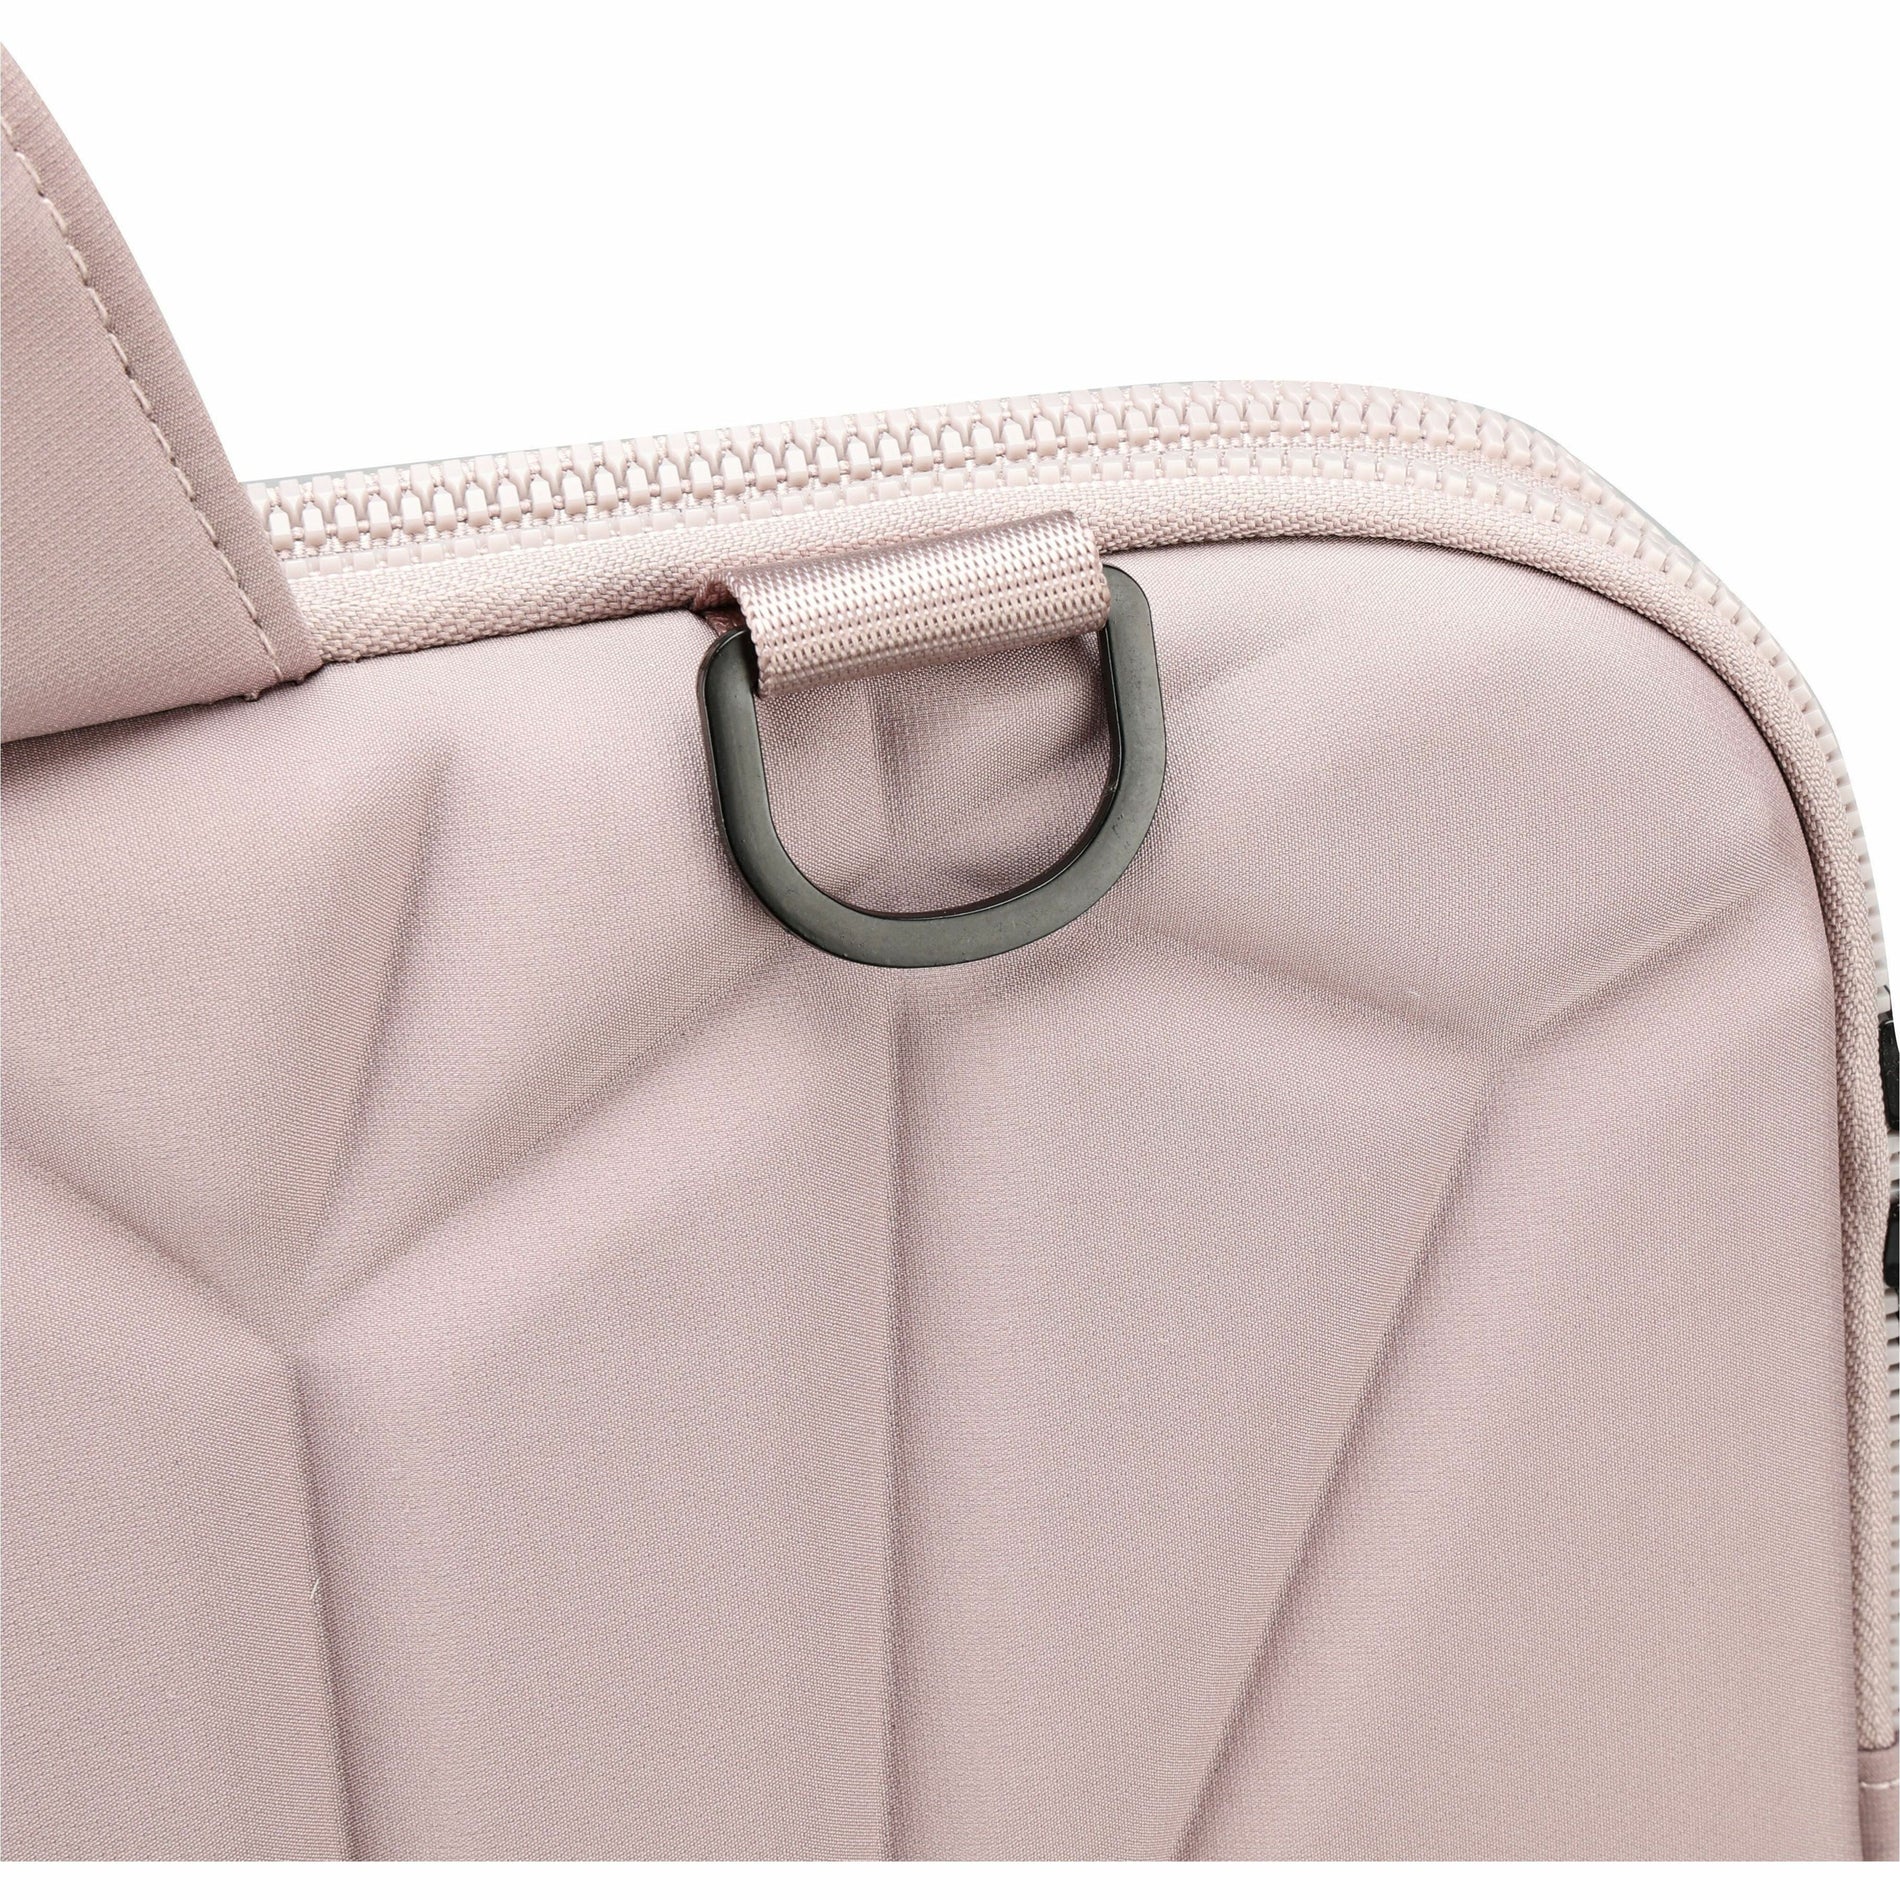 Swissdigital Design SD8533-82 Carrying Case, Sleeve for MacBook Pro, Notebook, Tablet, Smartphone